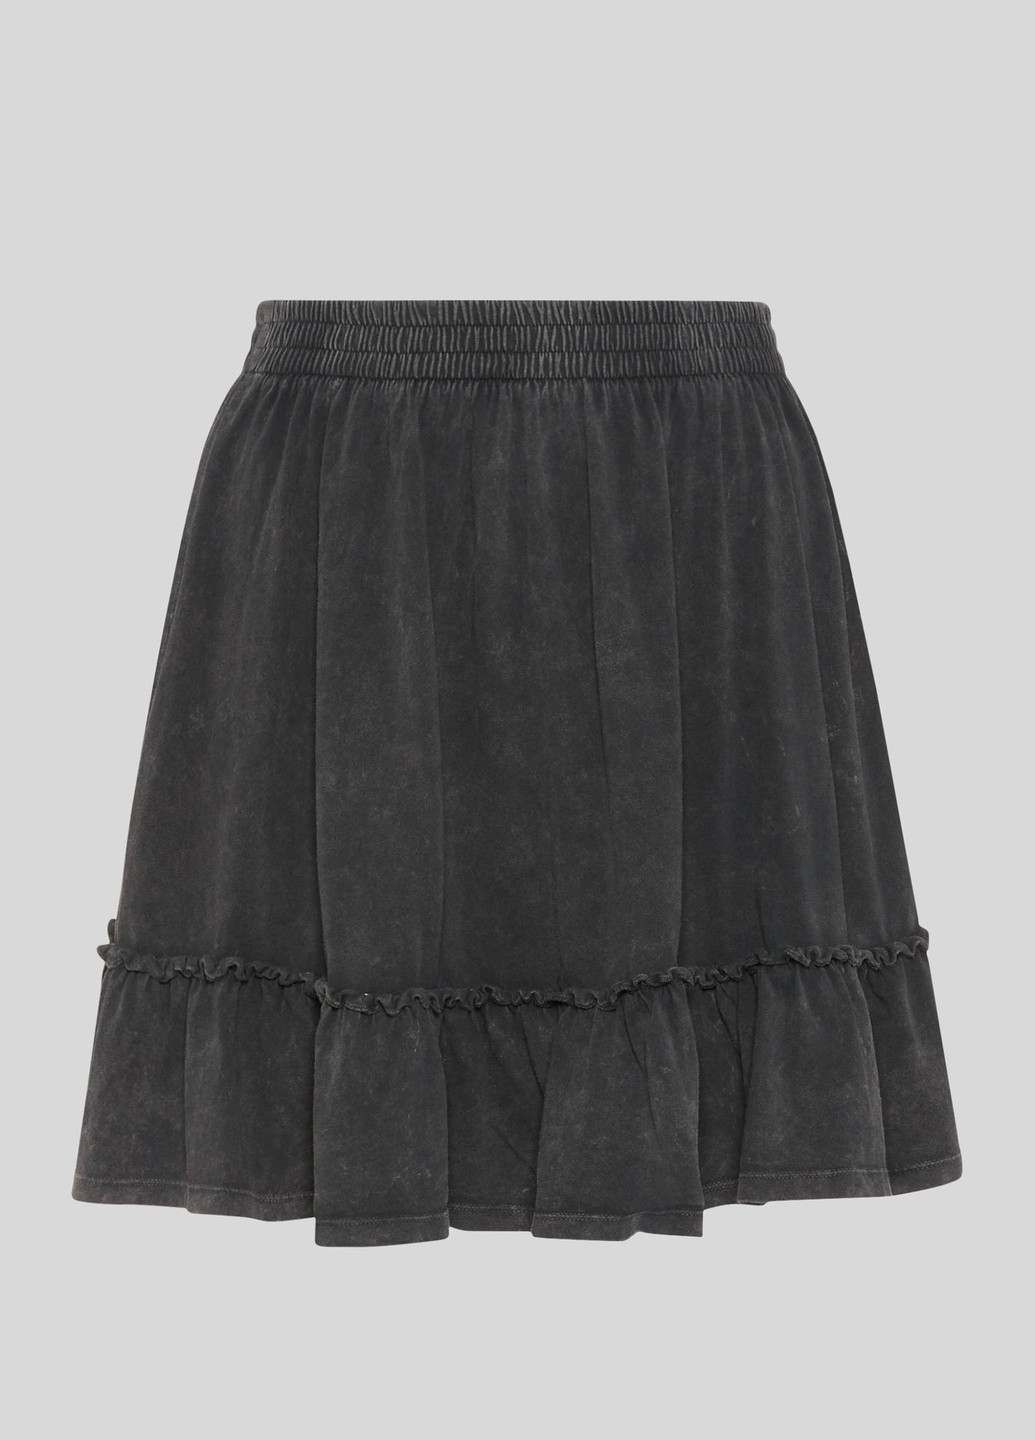 Темно-серая варенка юбка C&A